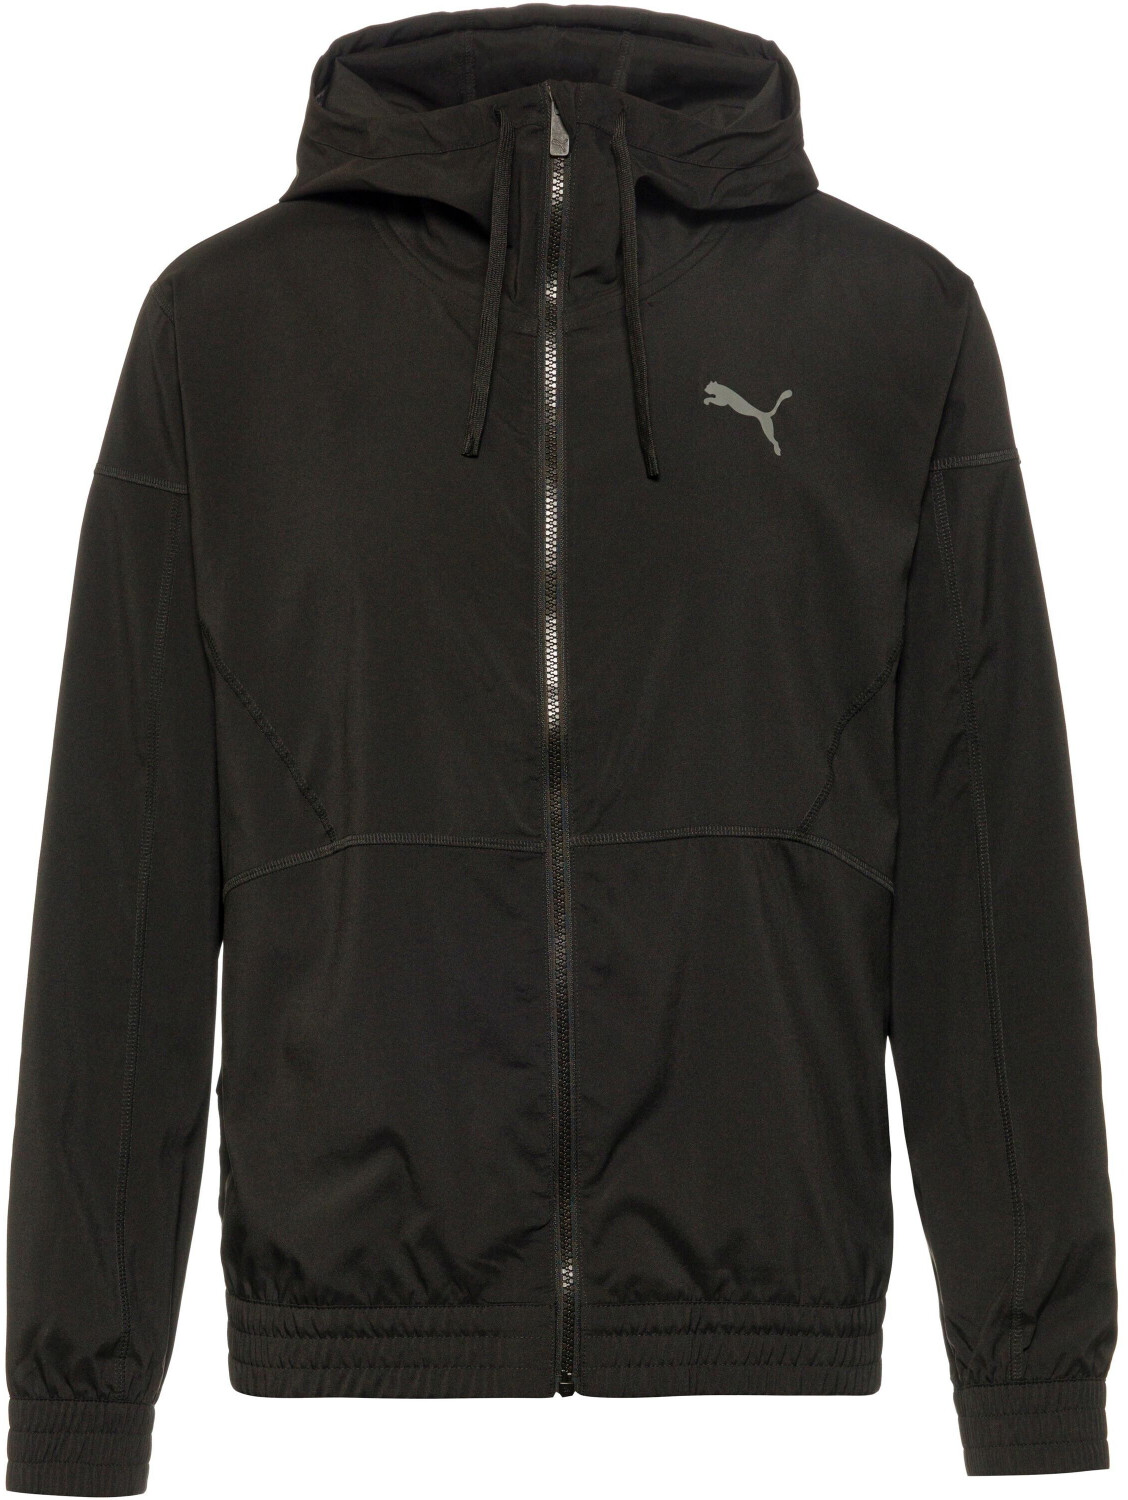 Puma Fit Men's Training Jacket (522128) puma black/cool dark gray ab 34,00  € | Preisvergleich bei